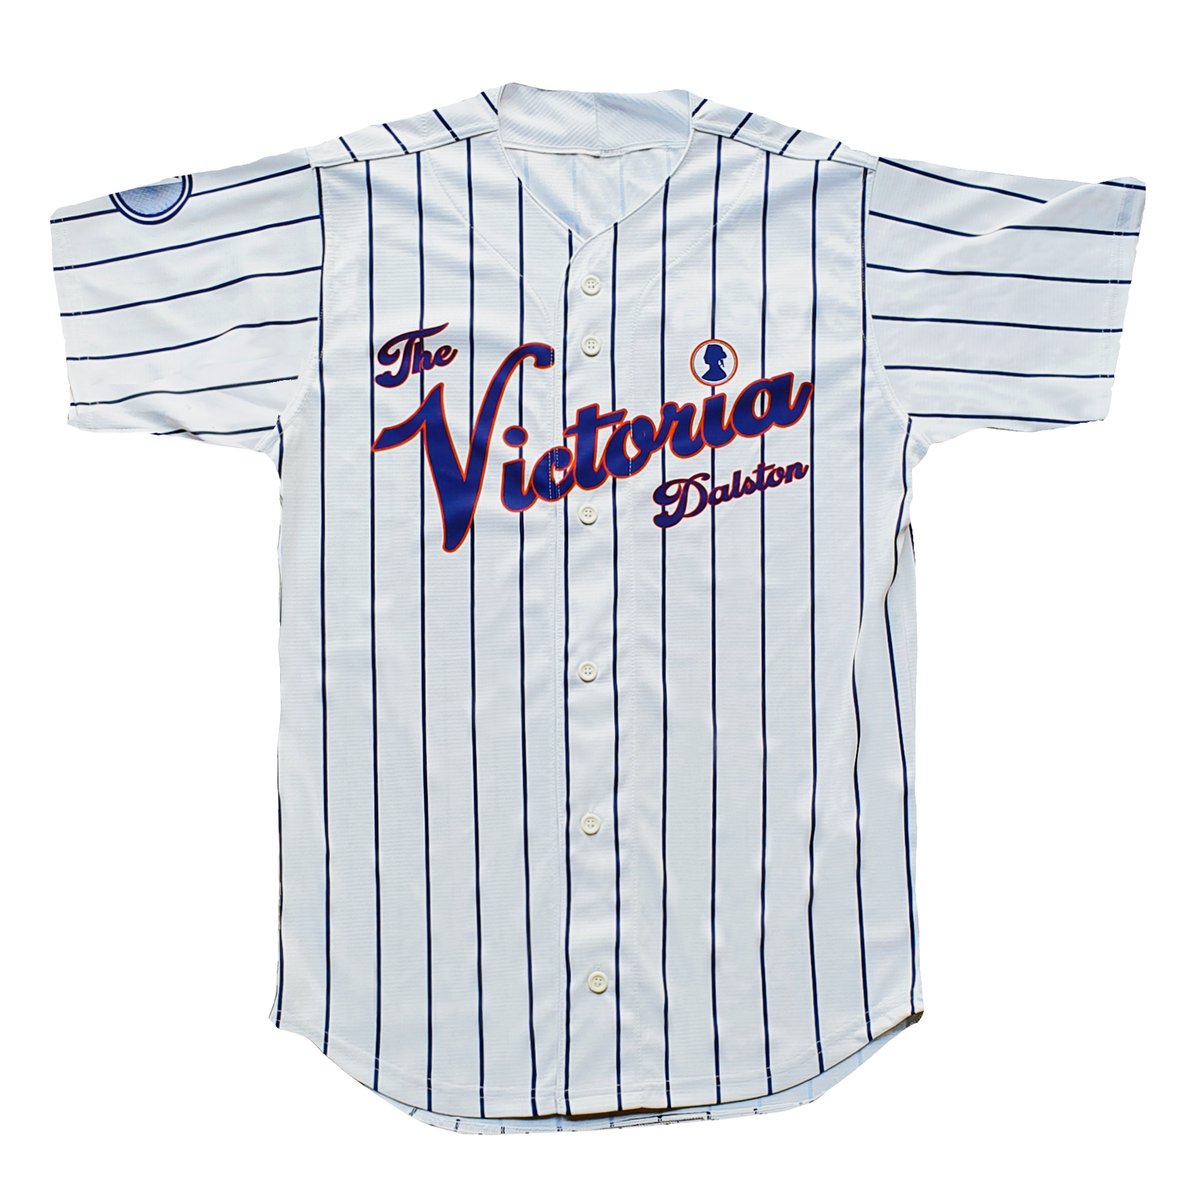 The Victoria Dalston Baseball Jersey